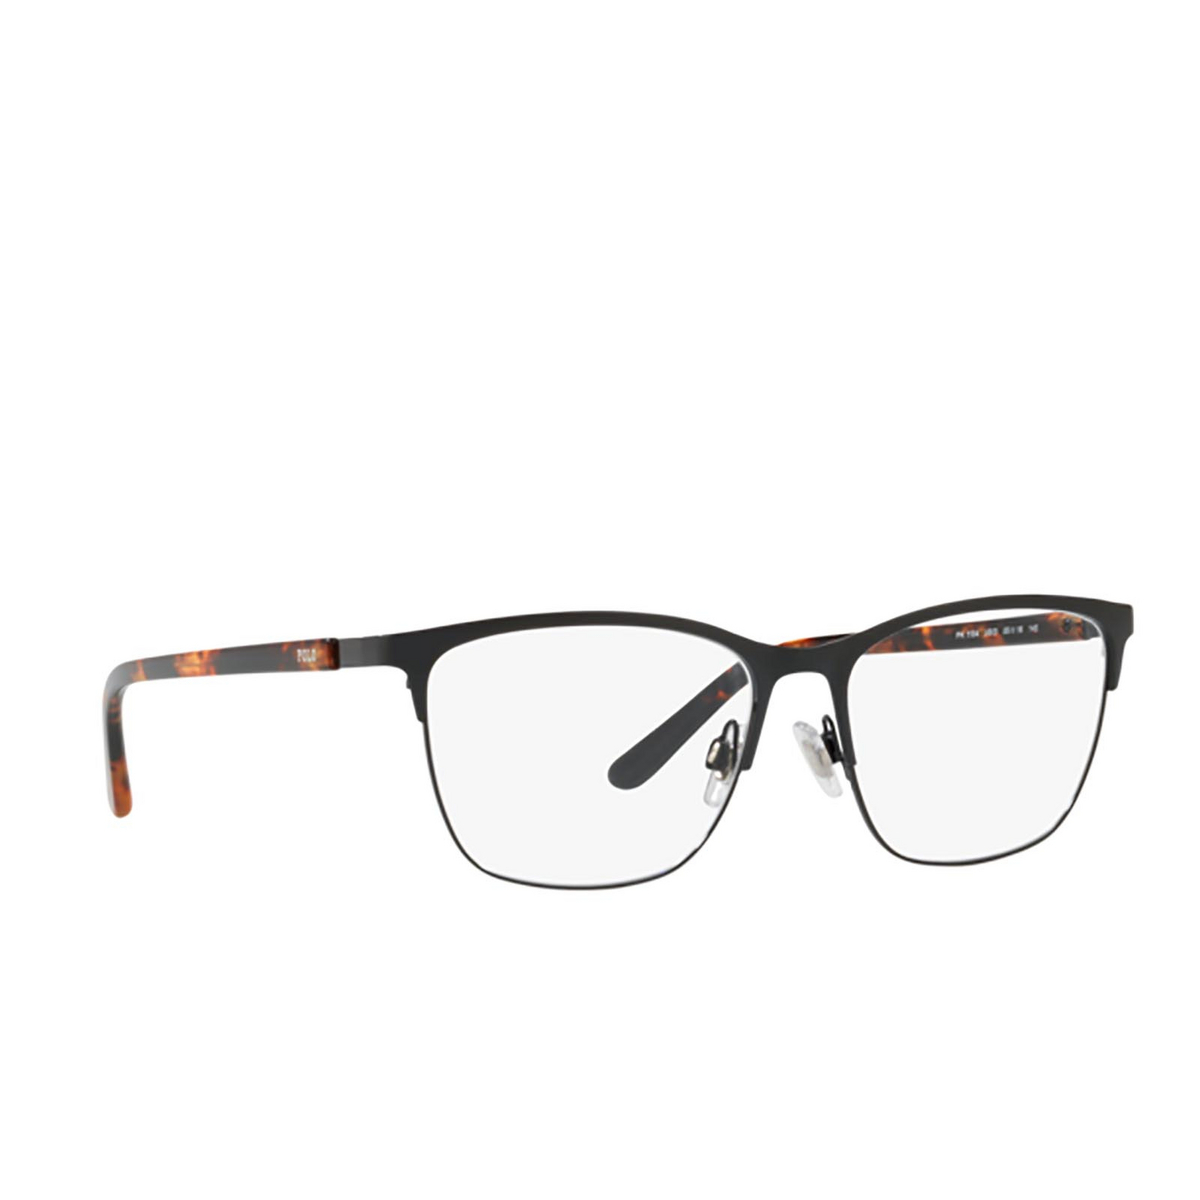 Polo Ralph Lauren® Square Eyeglasses: PH1184 color Shiny Black 9003 - three-quarters view.